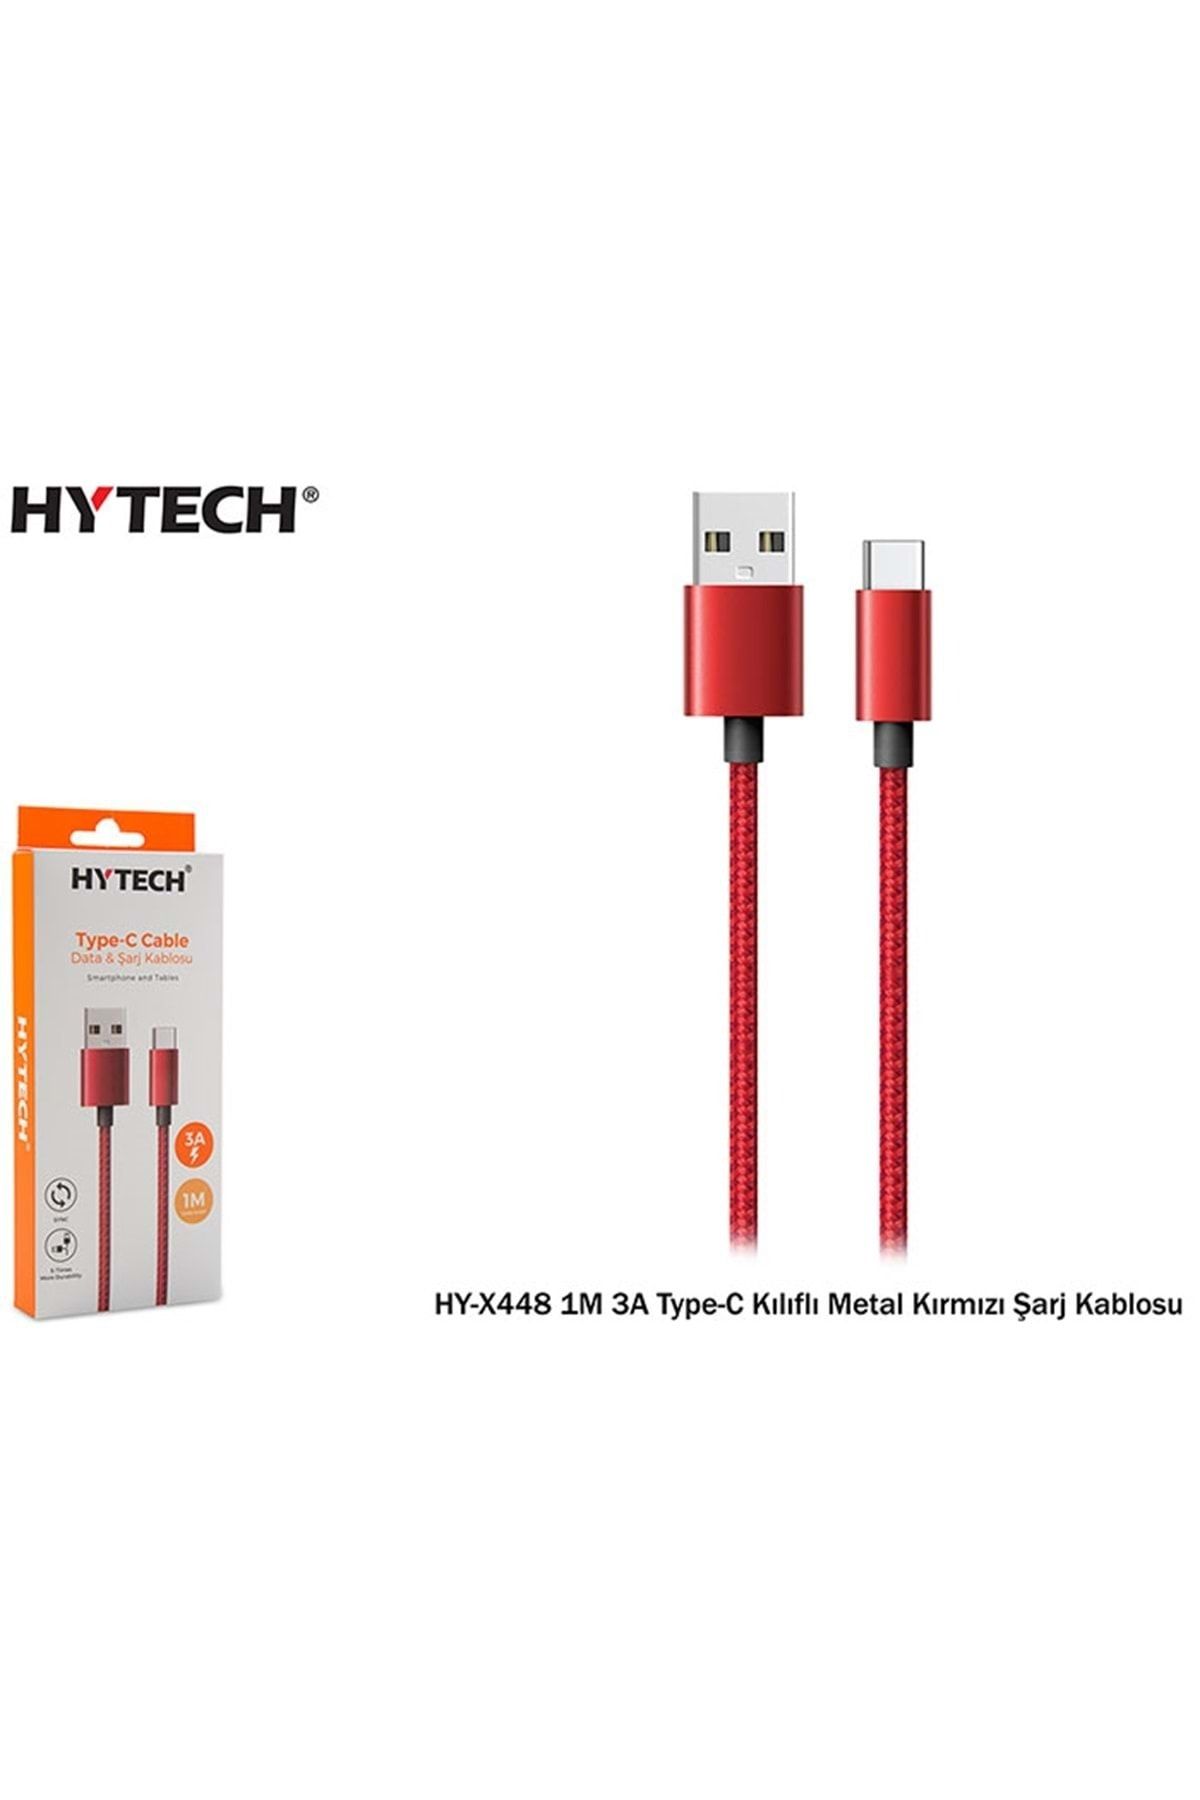 Hytech Hy-x448 1 Metre 3a Type-c Kılıflı Metal Kırmızı Şarj Kablosu